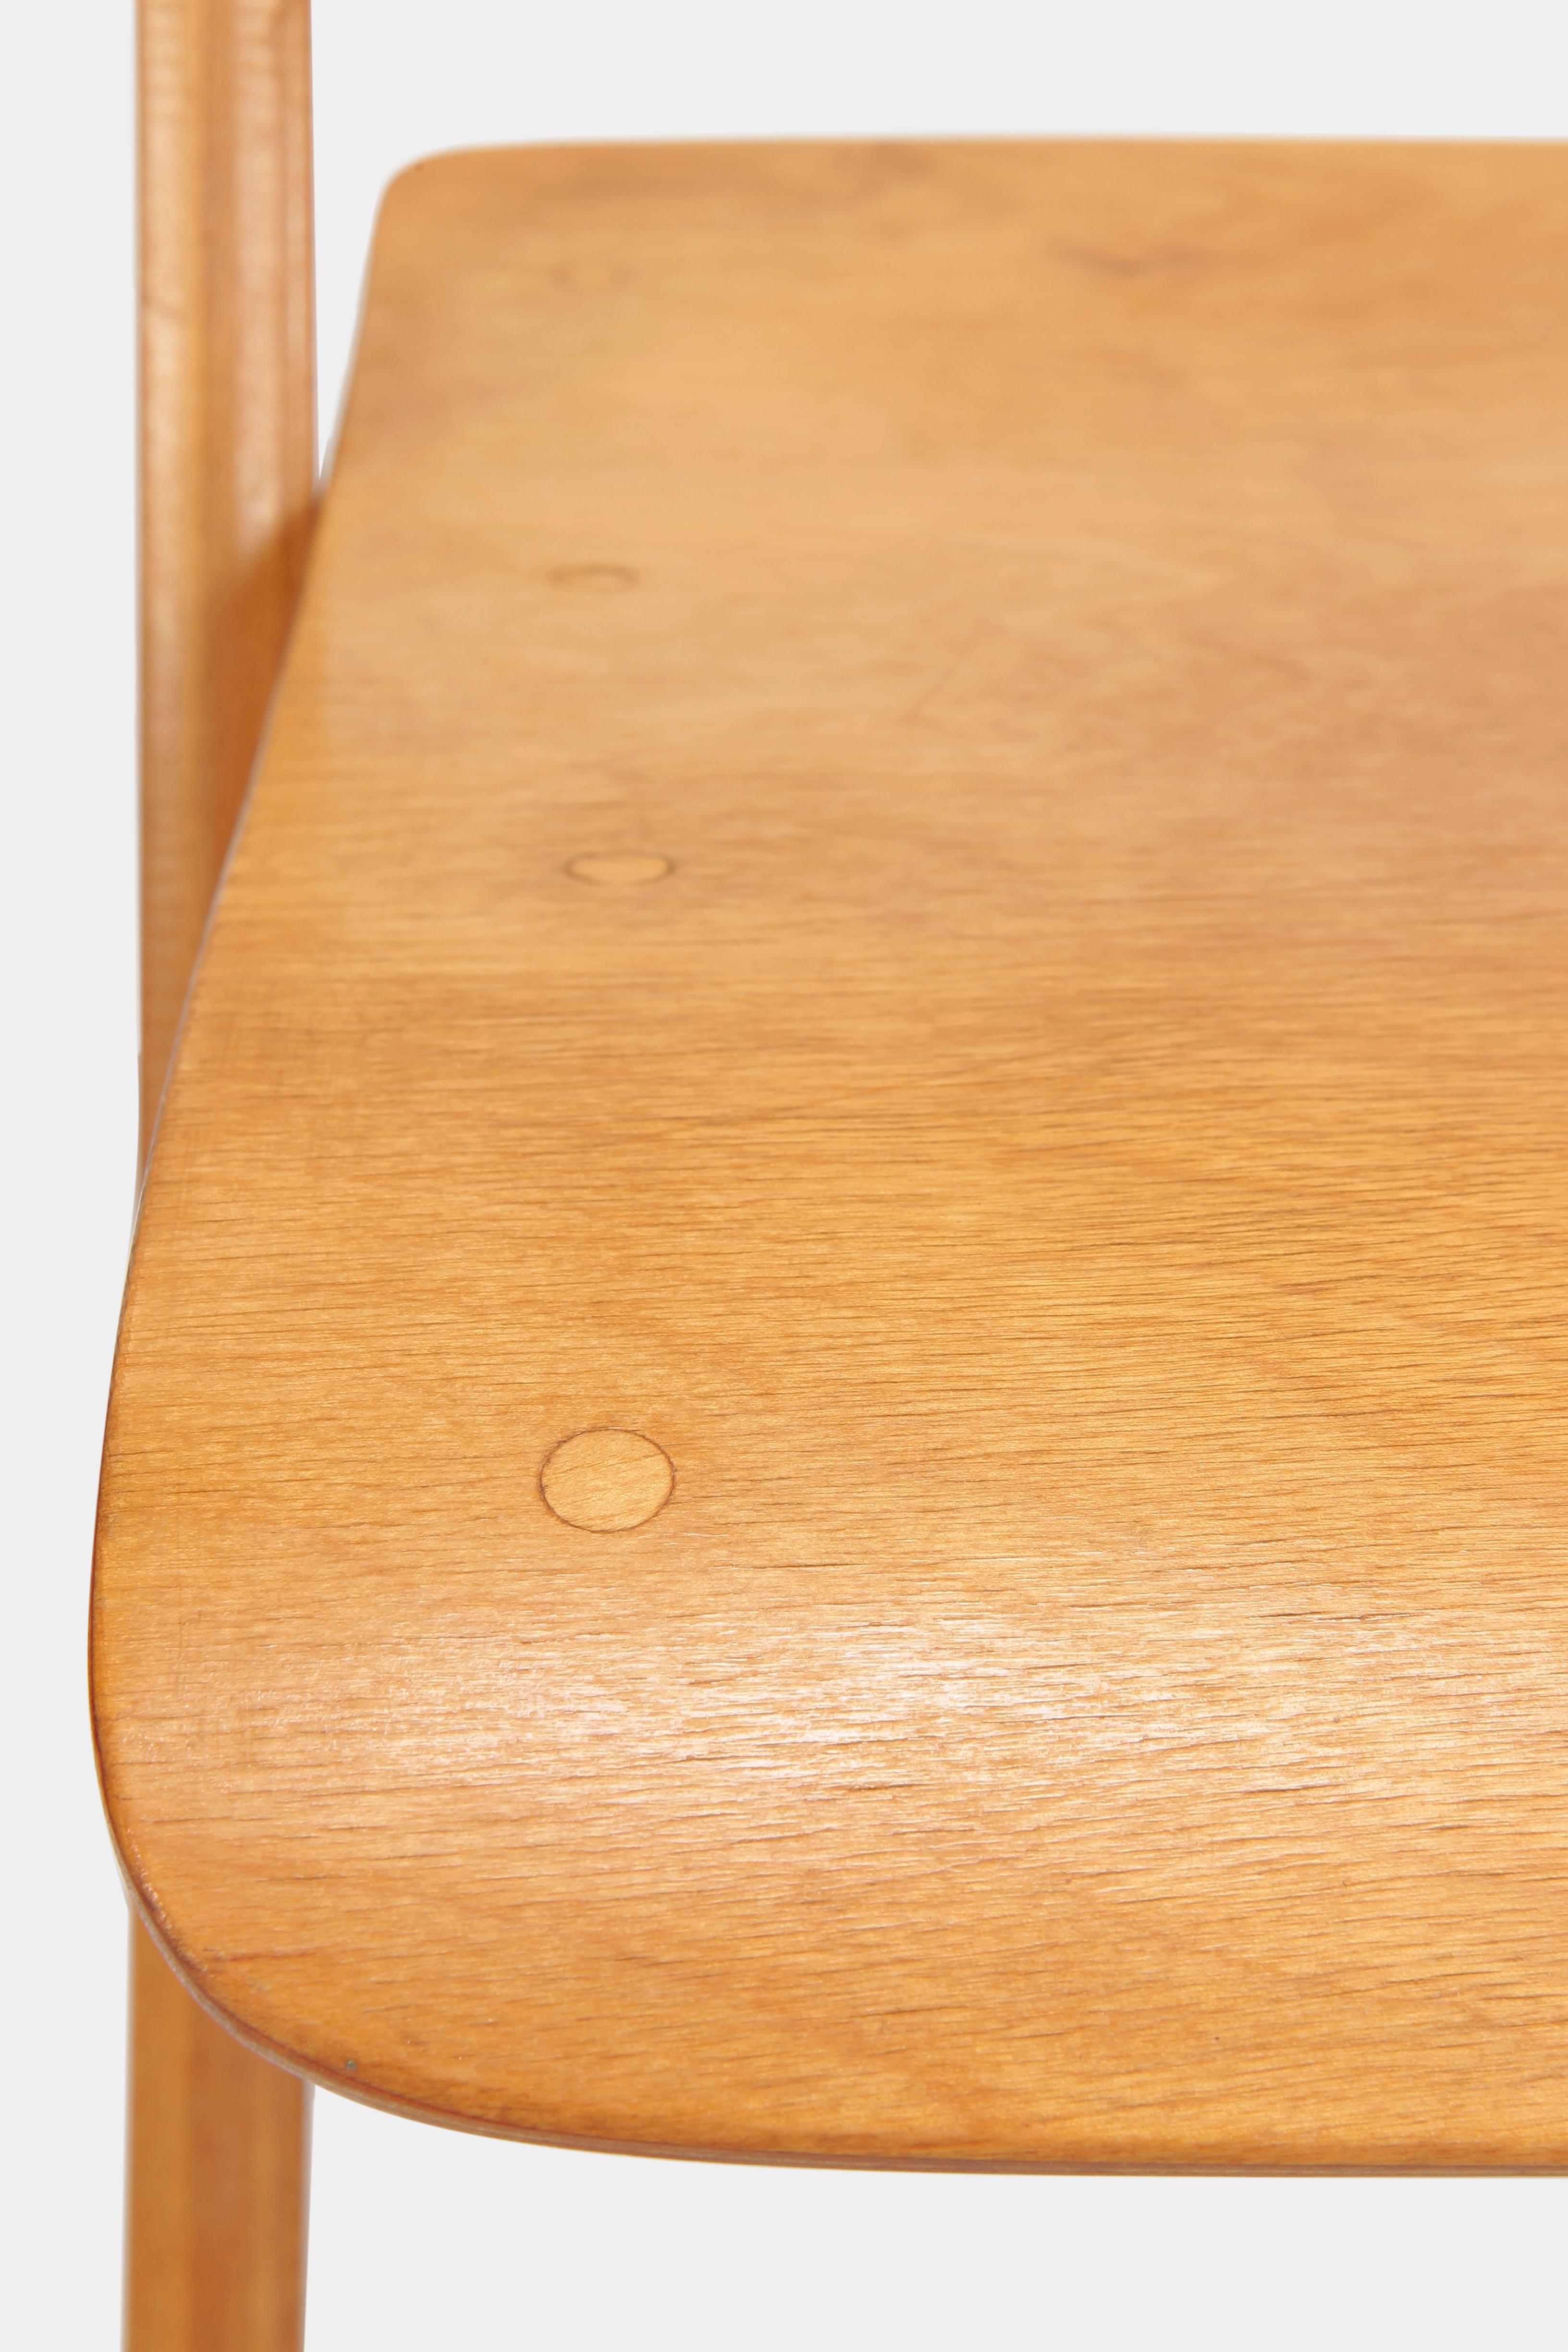 Swiss Midcentury Modern Birchwood Folding Chair, Wohnbedarf 1940s, Light Brown For Sale 3